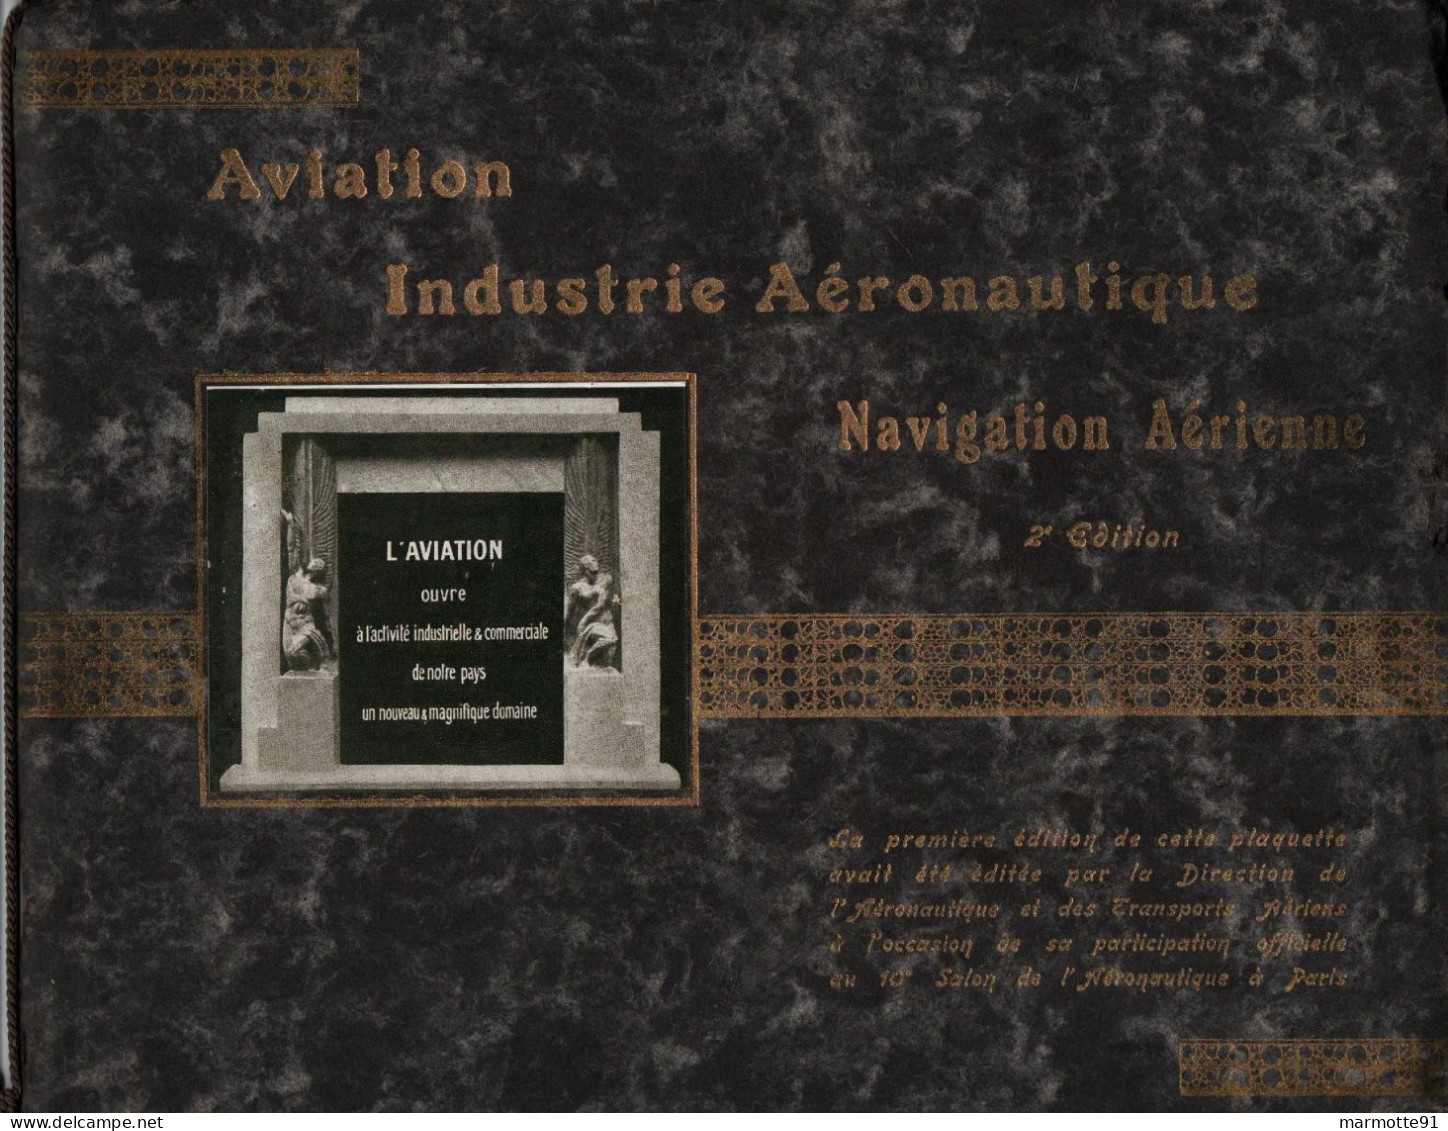 AVIATION INDUSTRIE AERONAUTIQUE NAVIGATION AERIENNE 2e EDITION  10e SALON AERONAUTIQUE PARIS - Aerei